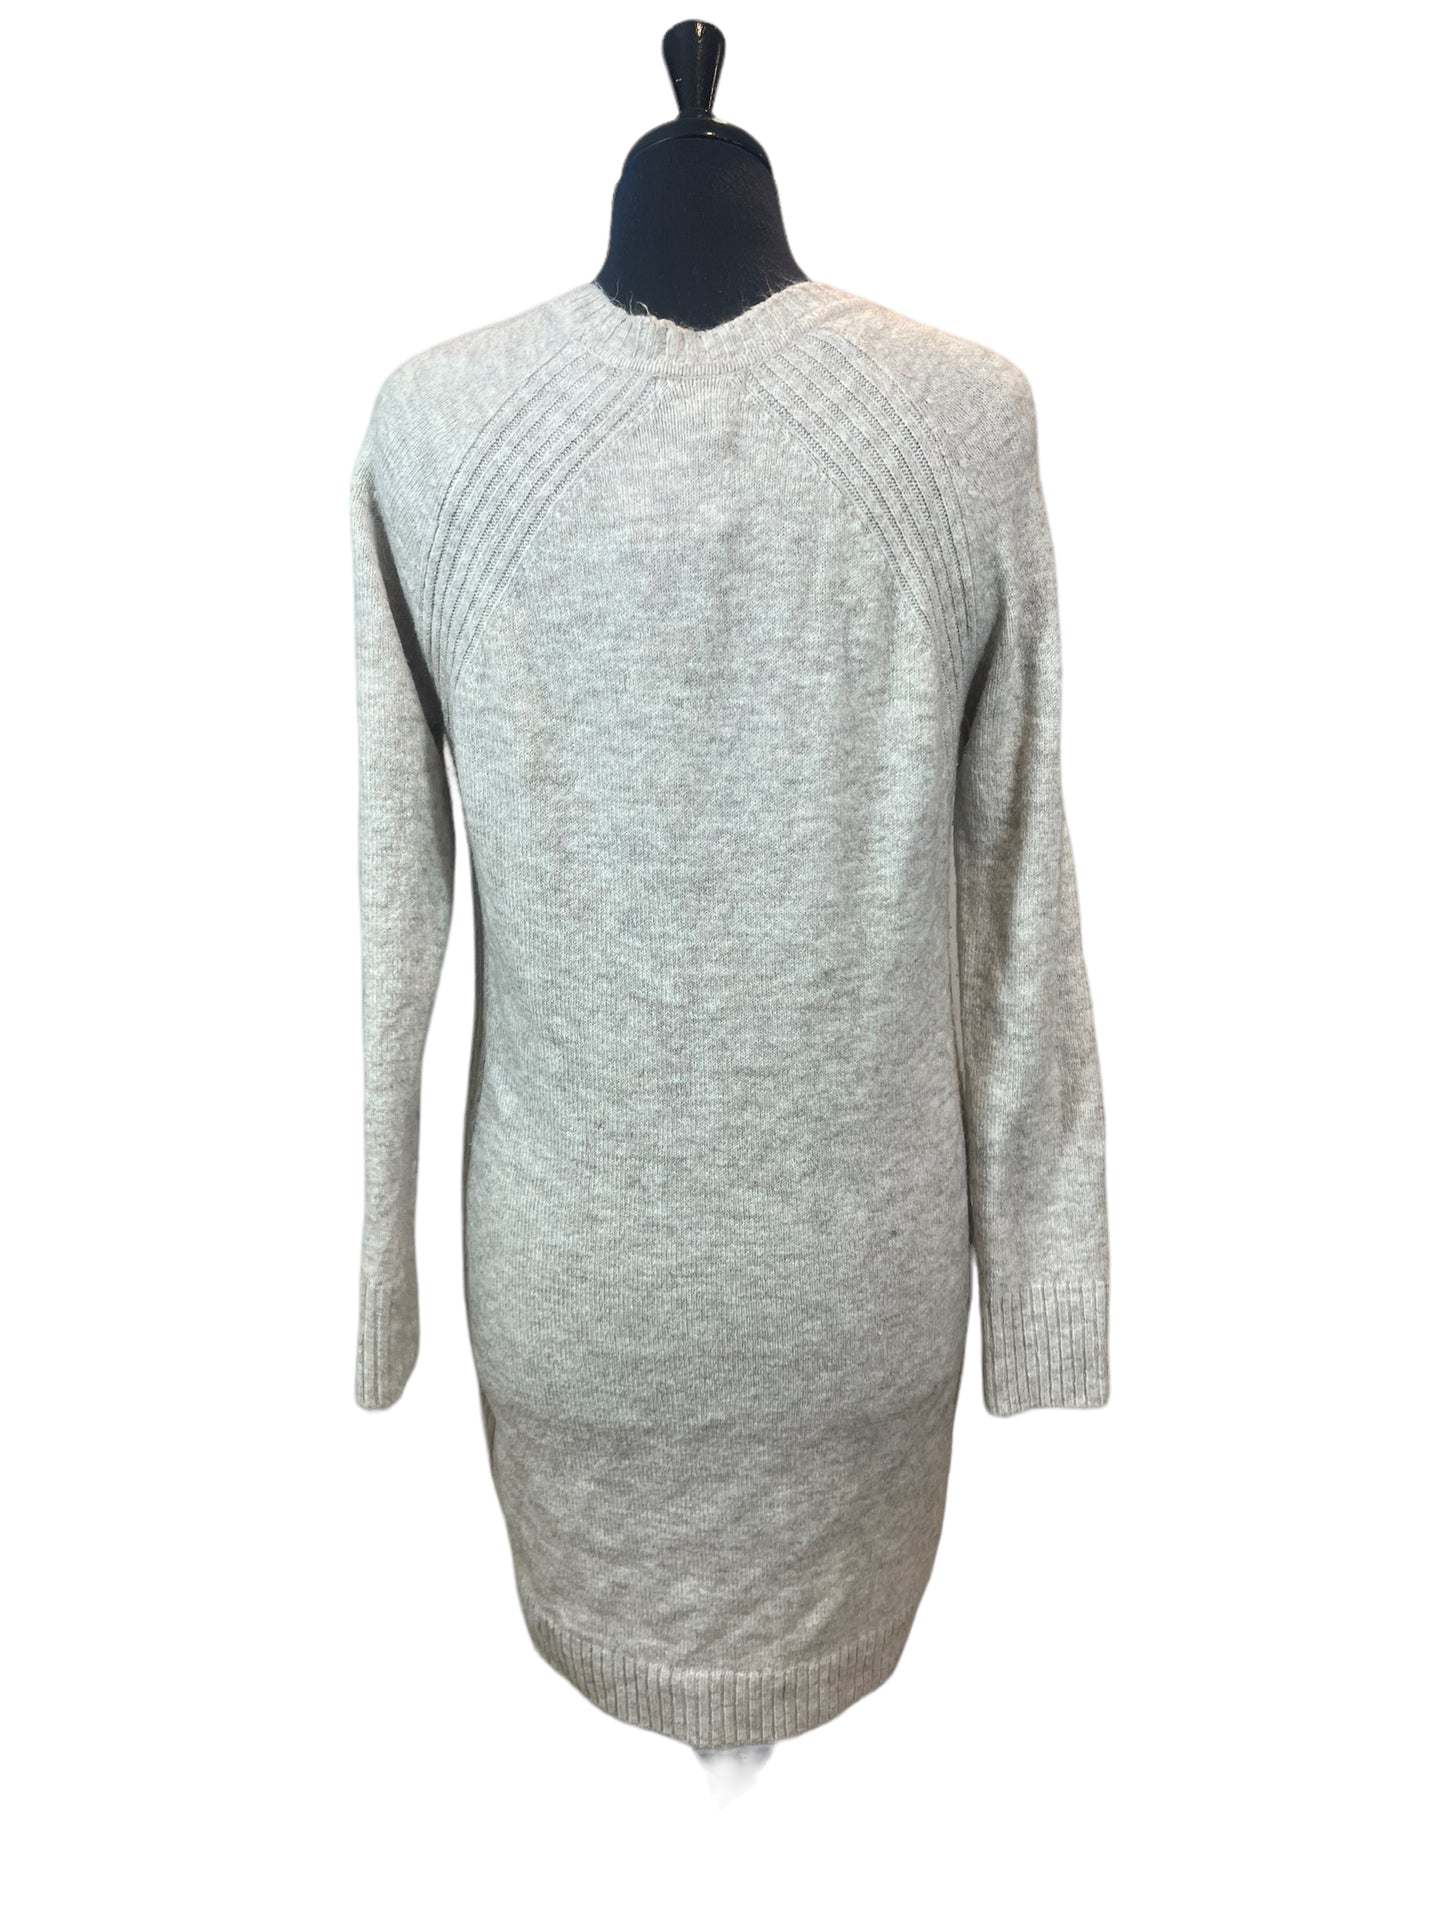 Shrinking Violet Grey Sweater Dress